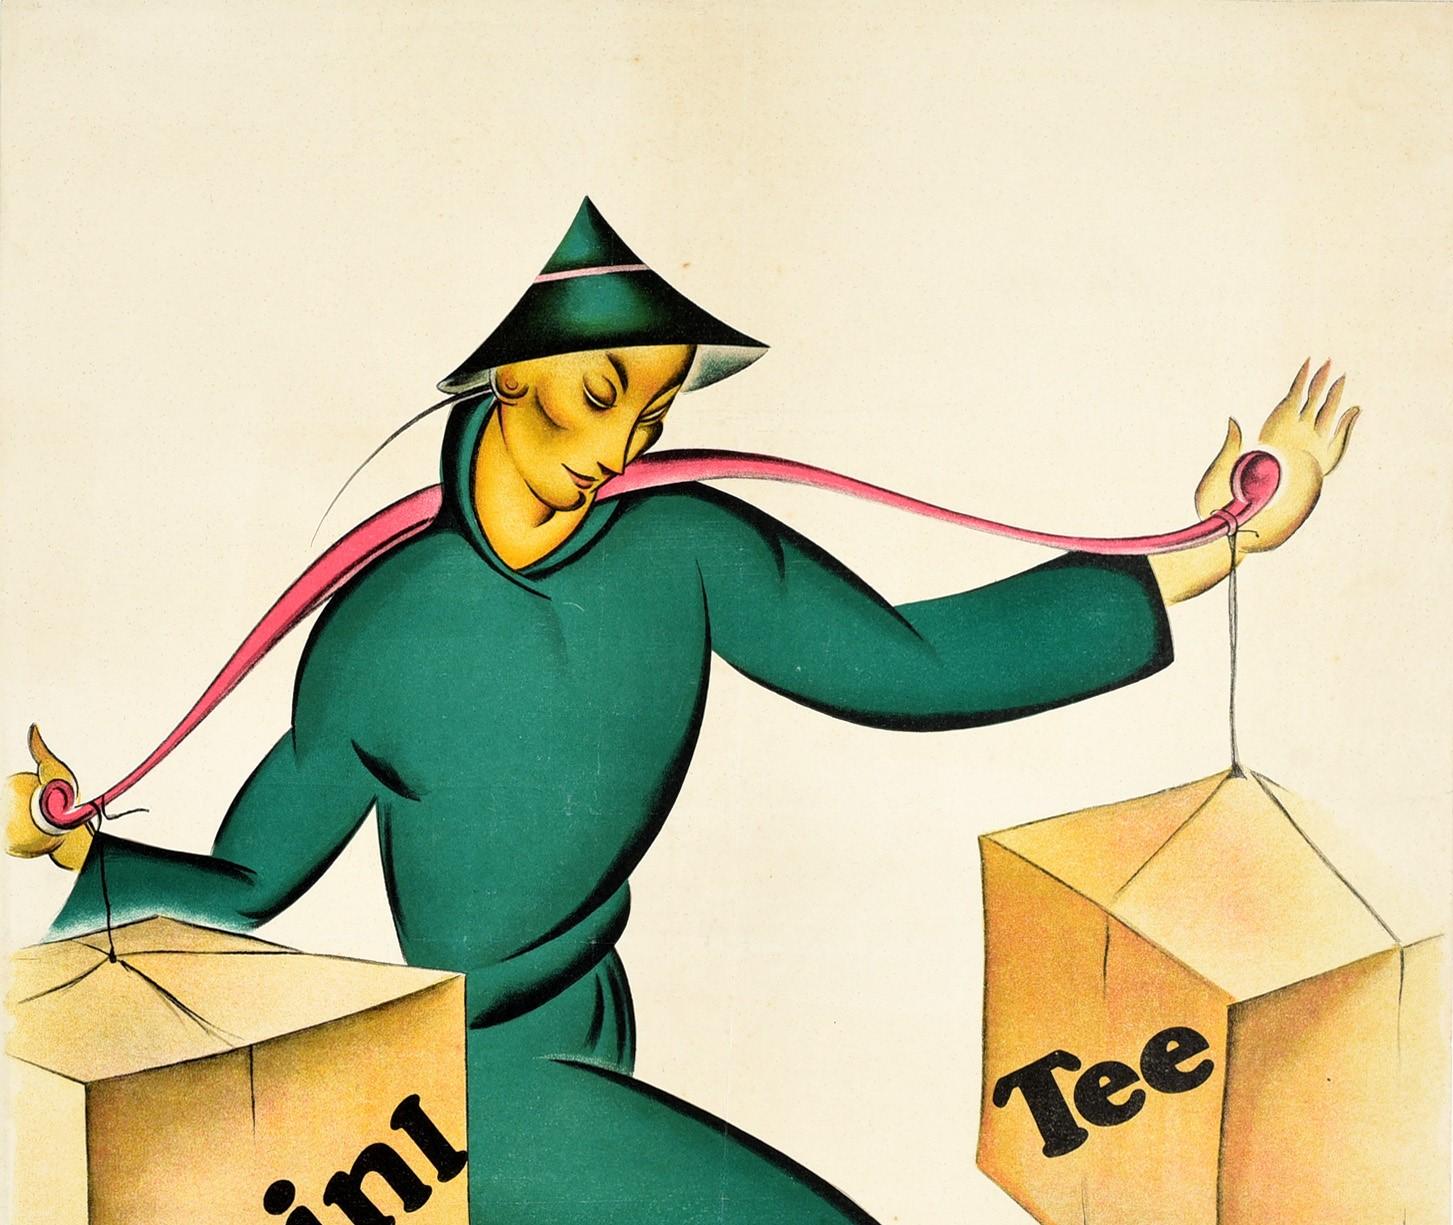 Original Vintage Poster For Julius Meinl Tee Asia Tea Drink Advertising Design - Print by Otto Exinger